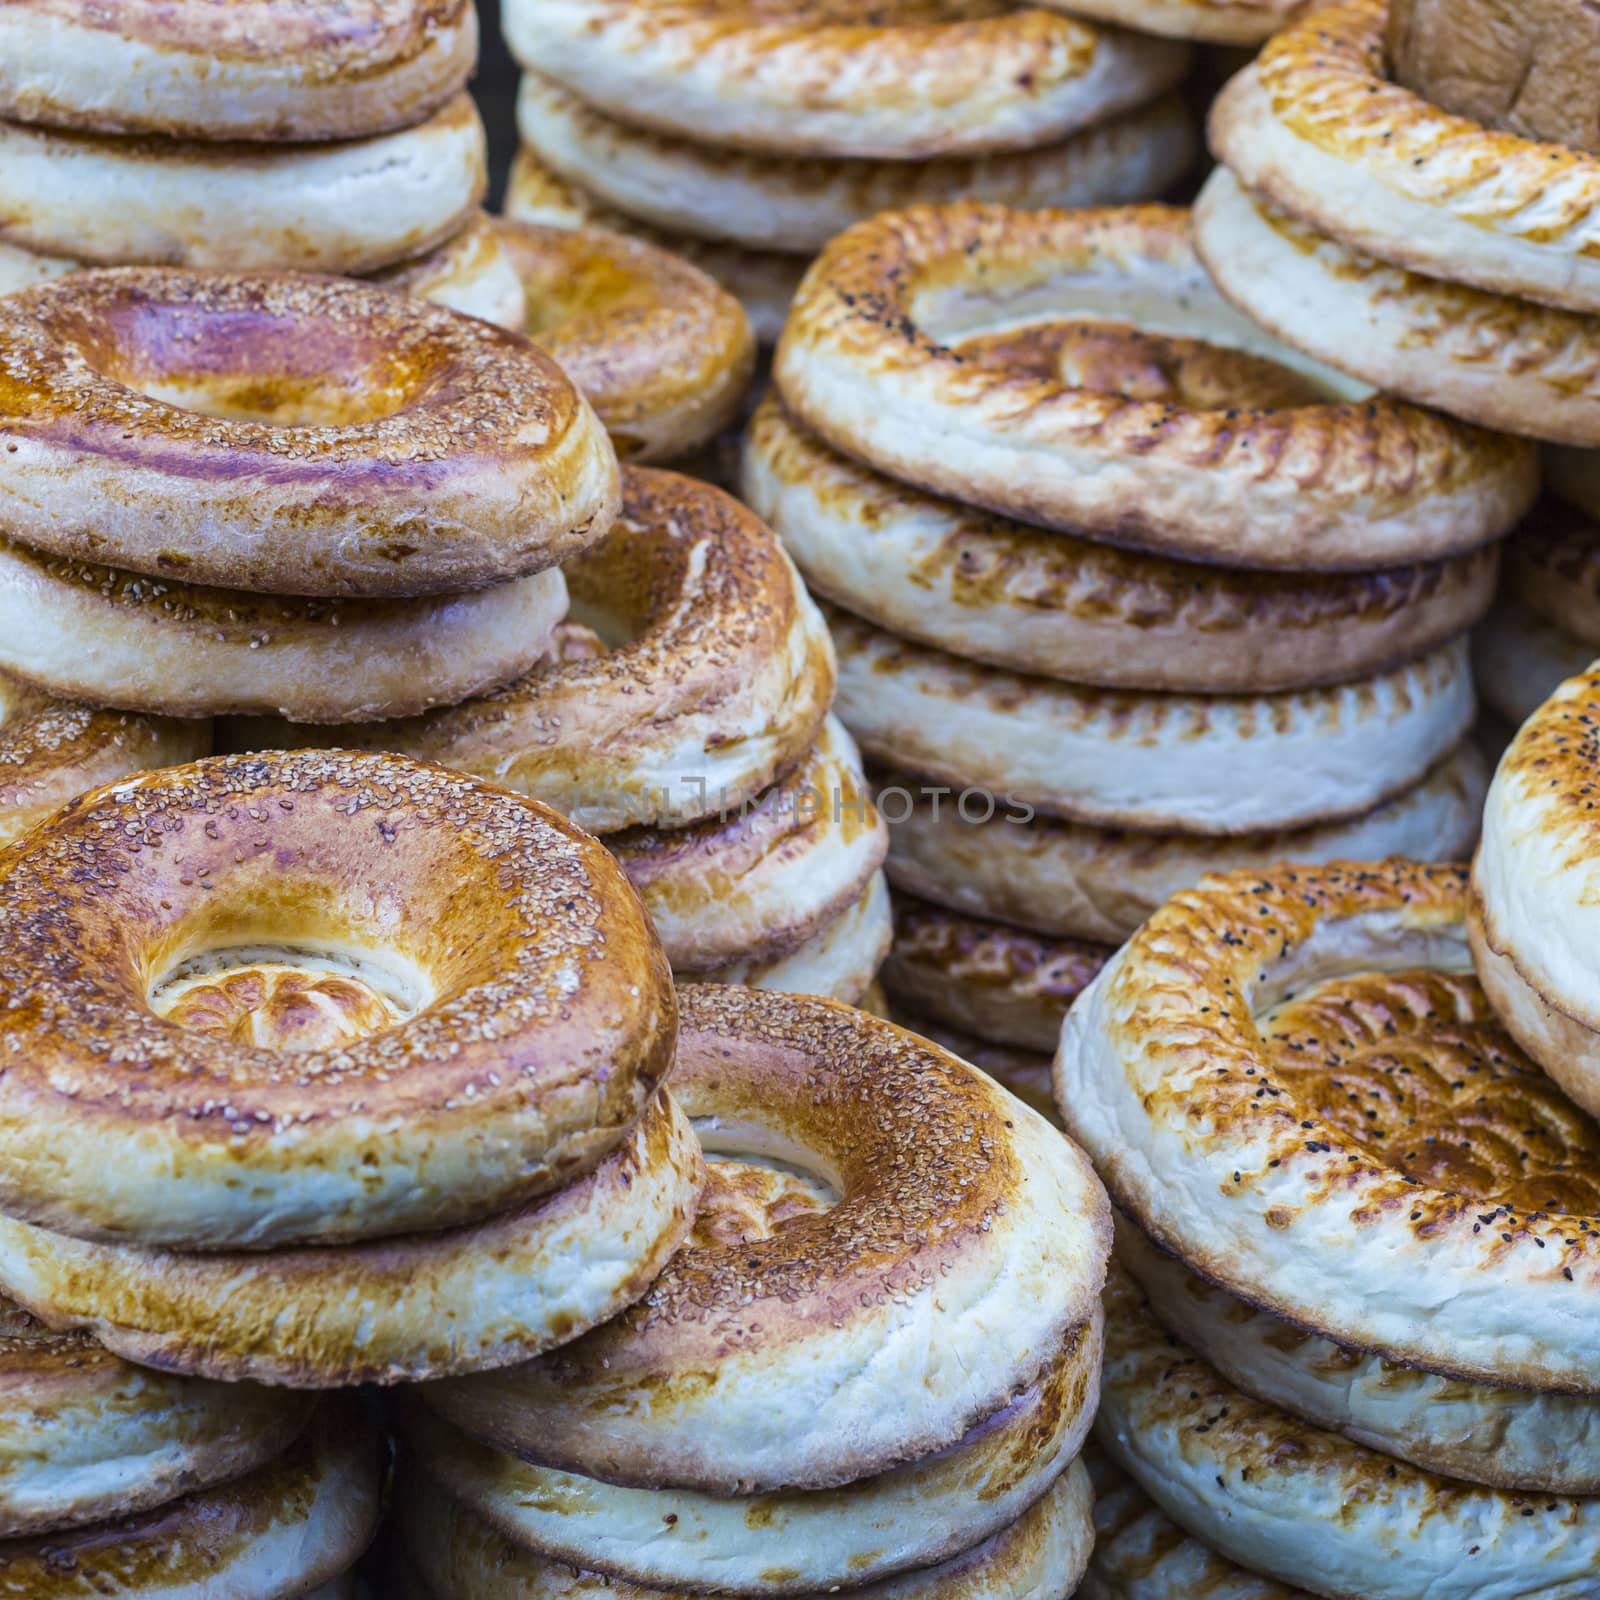 Kirghiz bread tokoch on Sunday market in Osh. Kyrgyzstan.